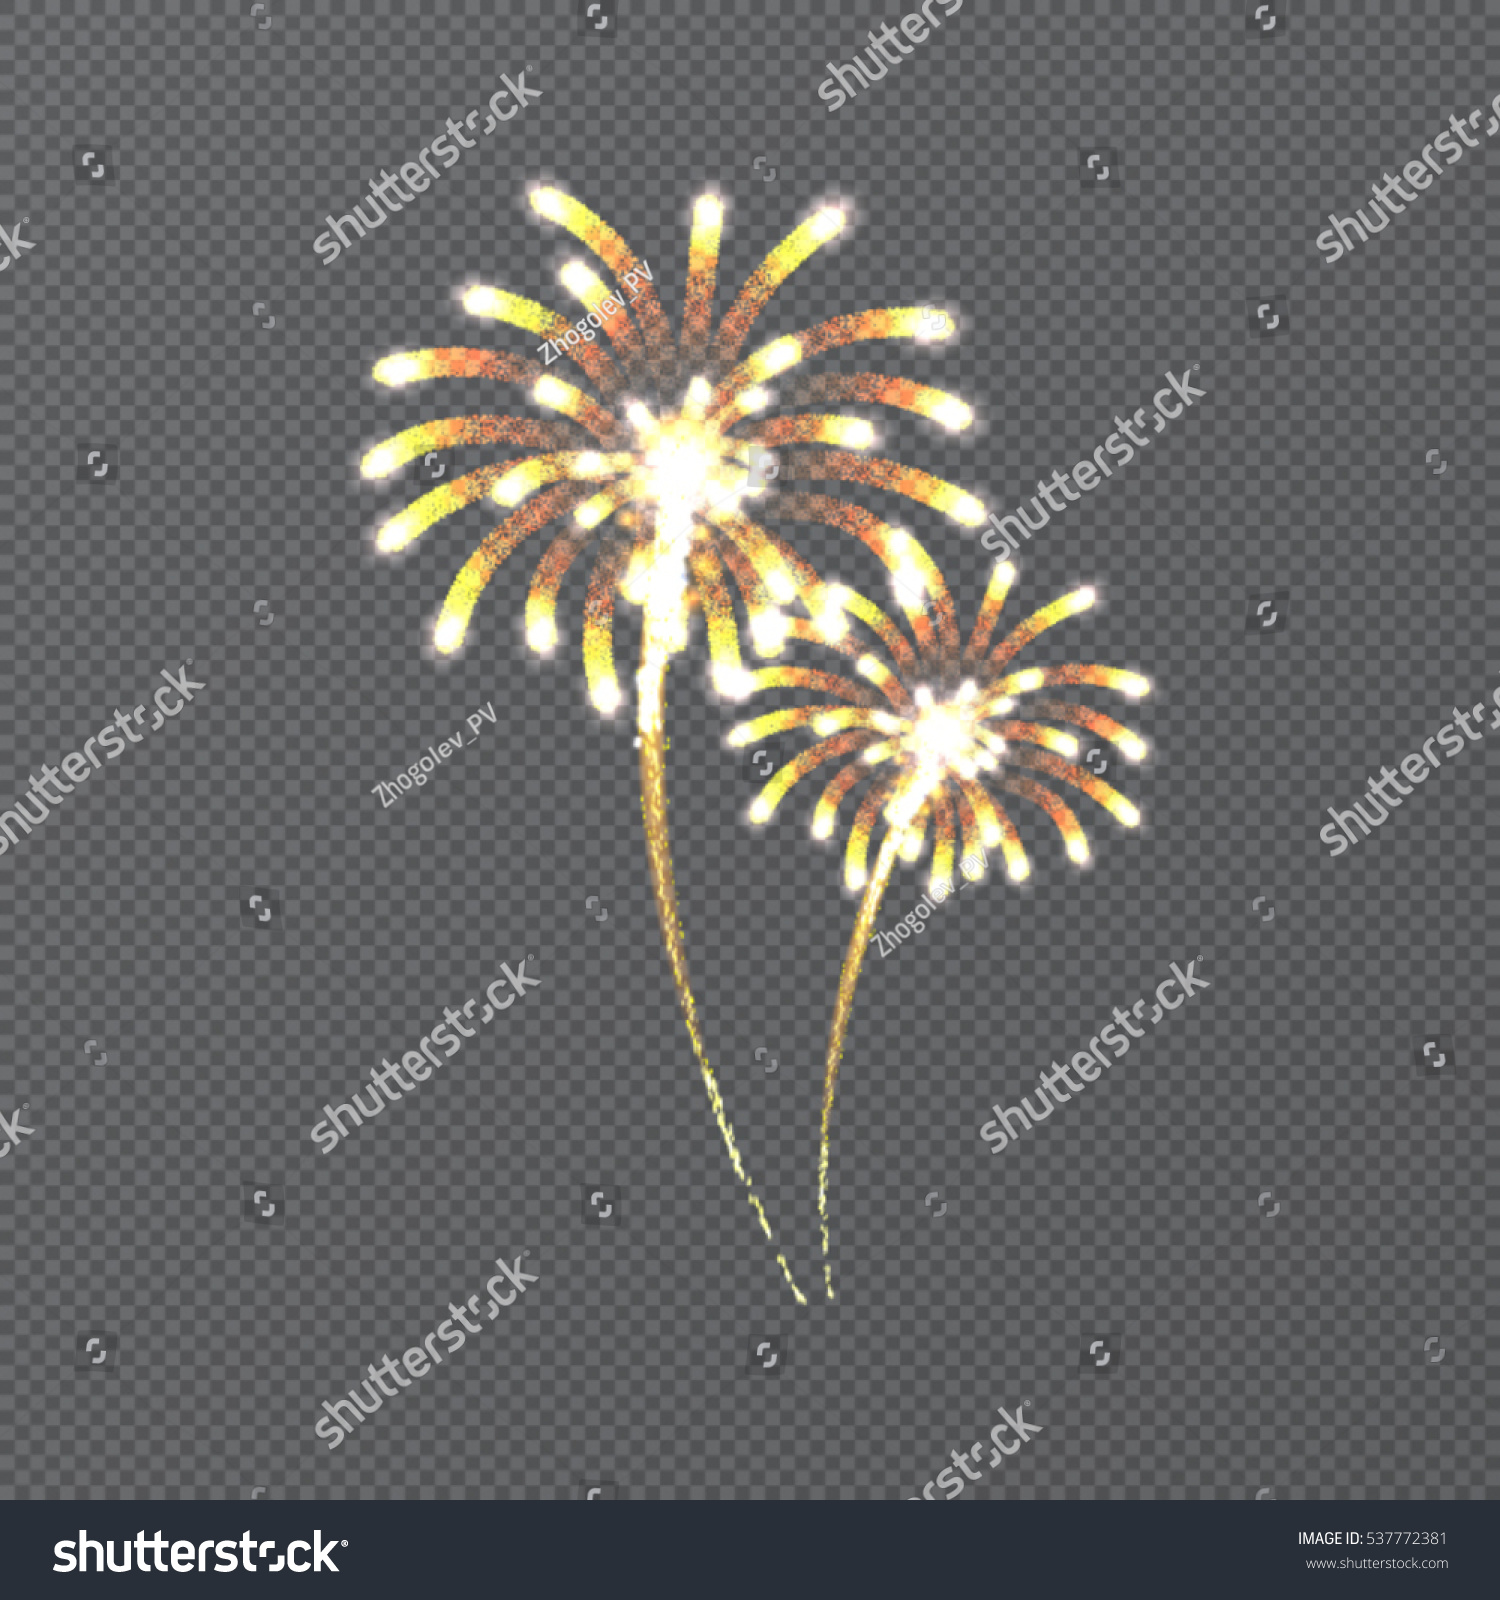 Fireworks On Transparent Background Stock Vector 537772381 - Shutterstock